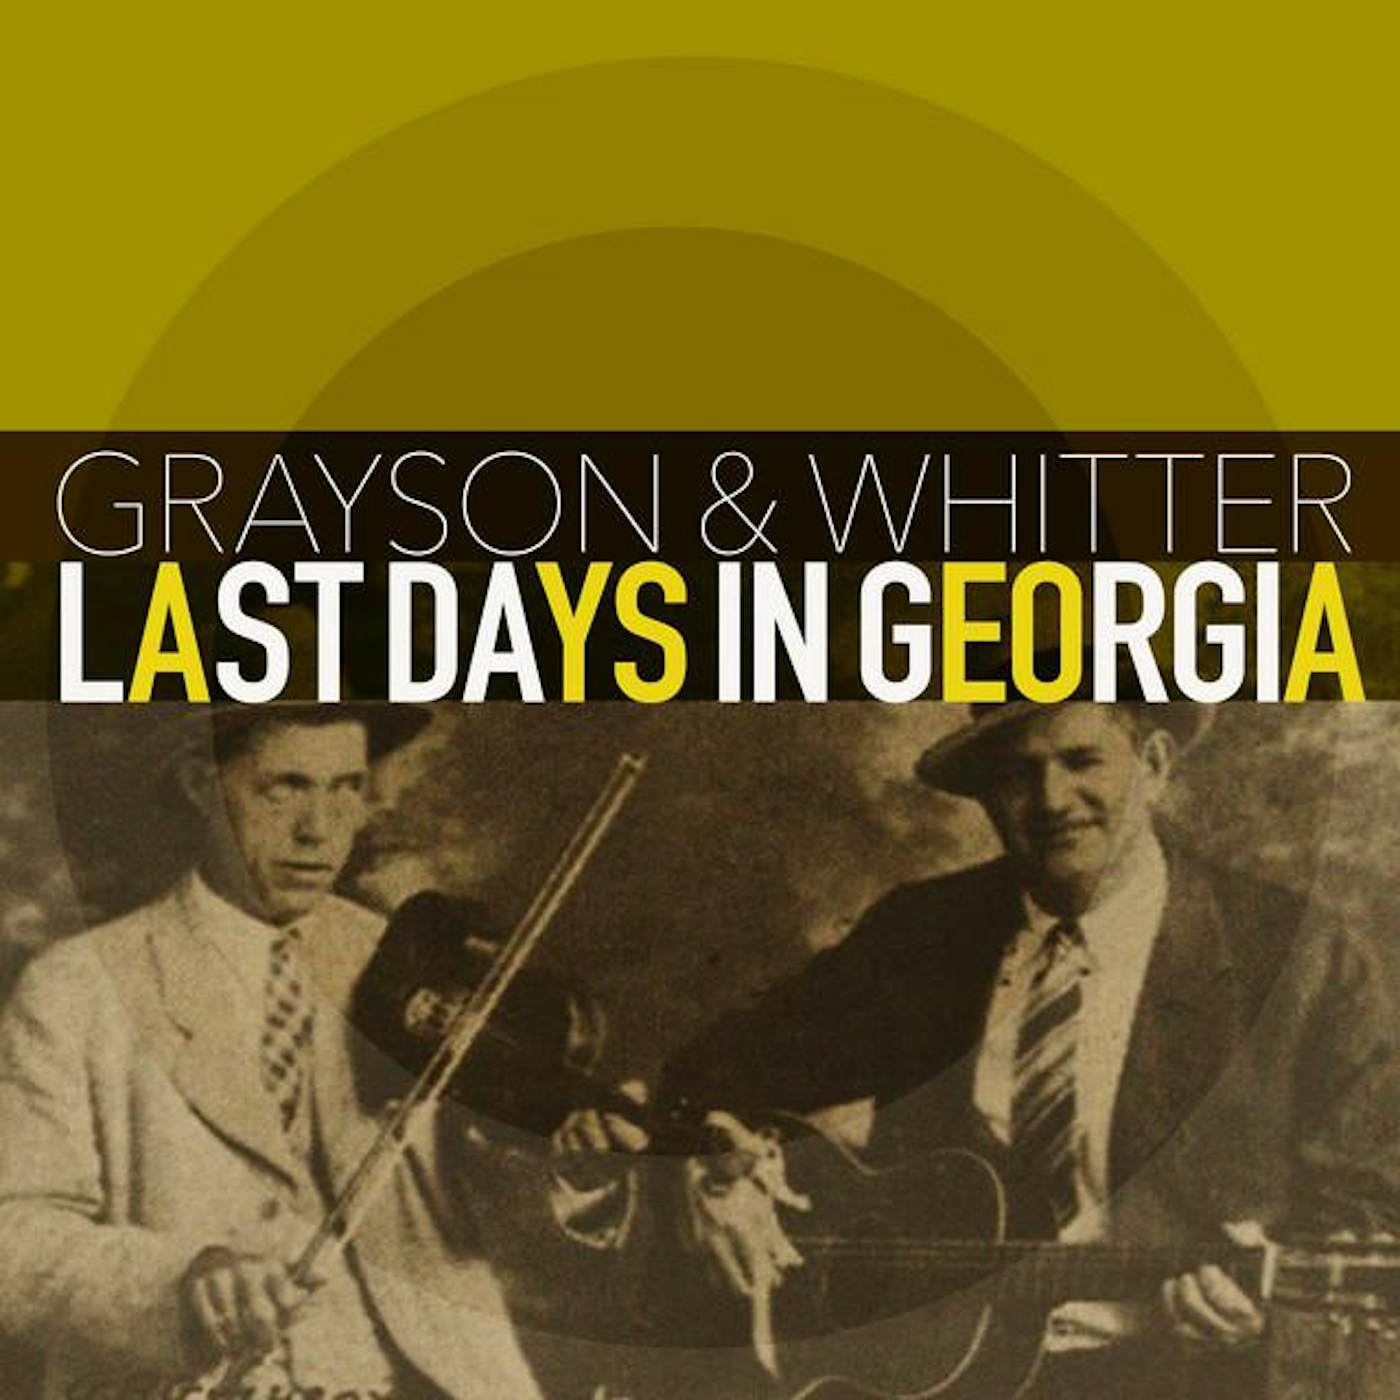 Grayson & Whitter